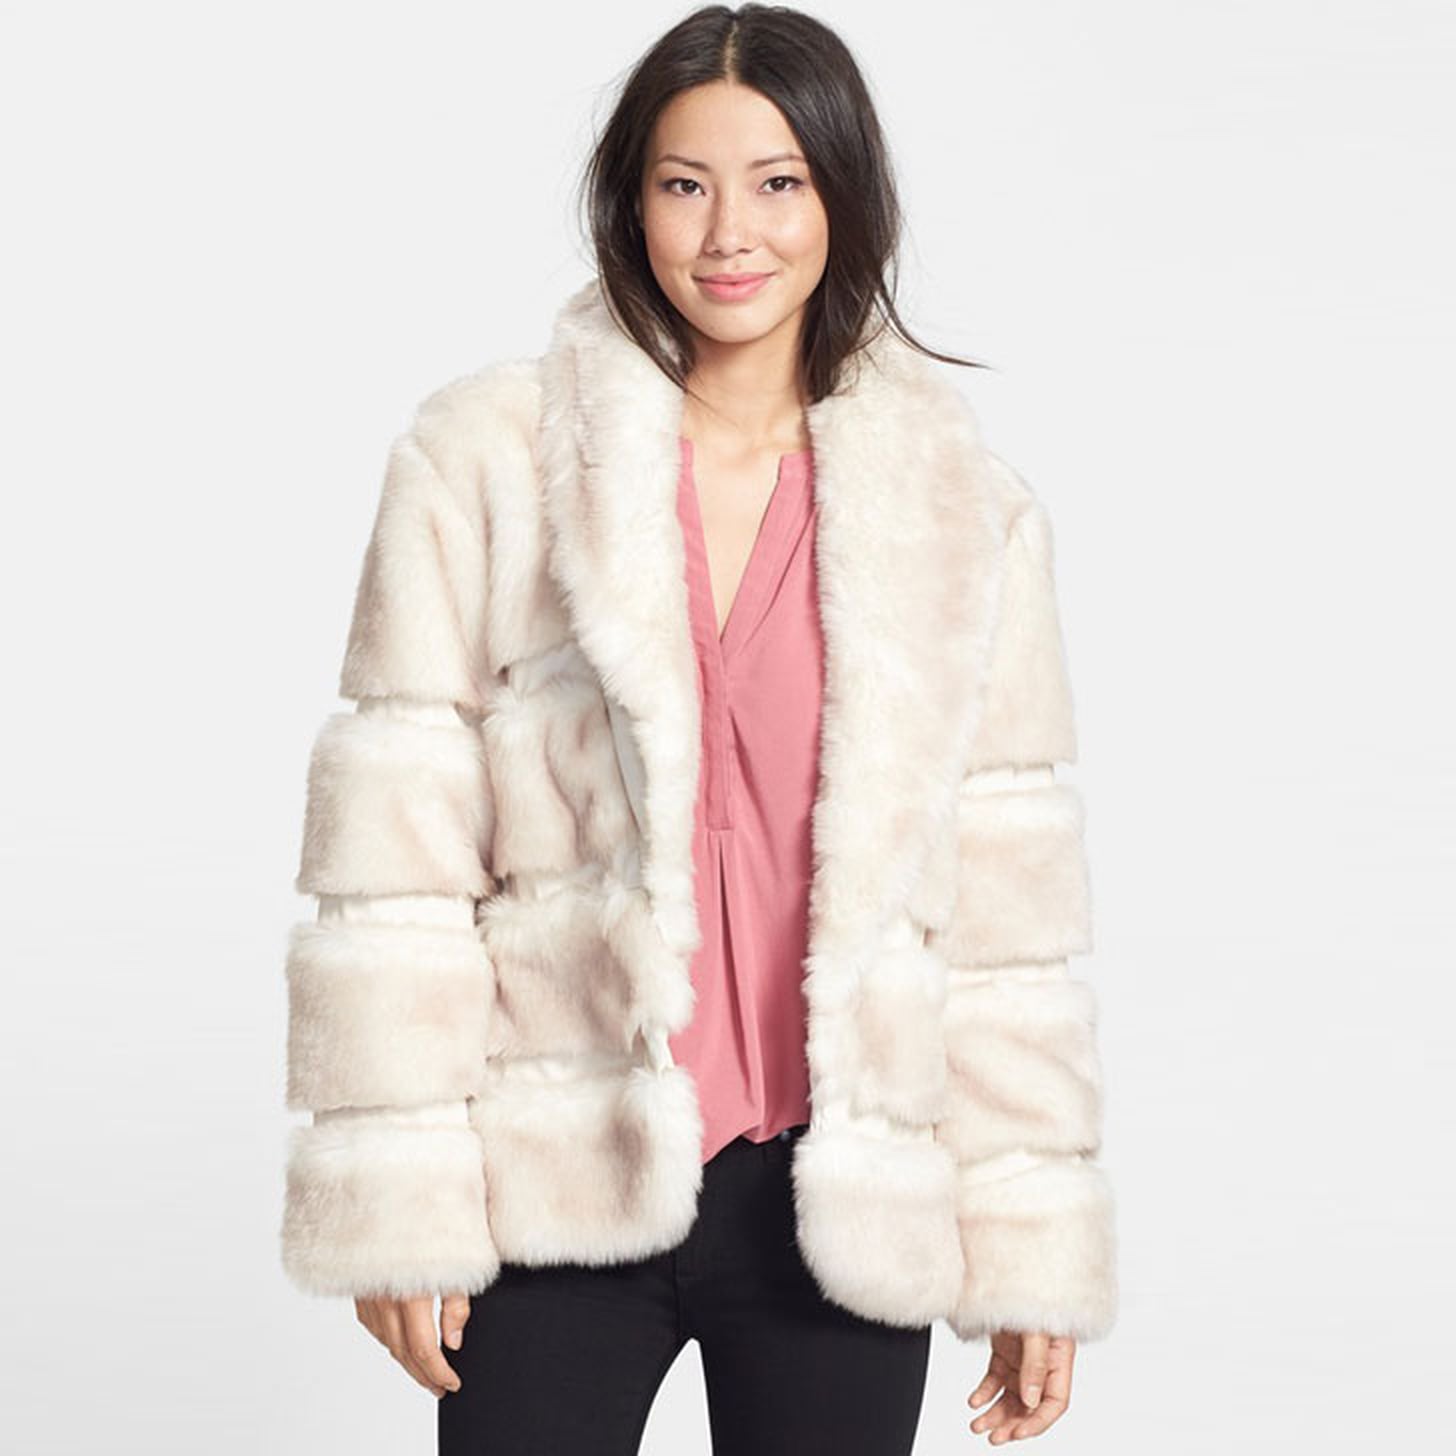 Fashionable Winter Coats Under $200 | POPSUGAR Fashion